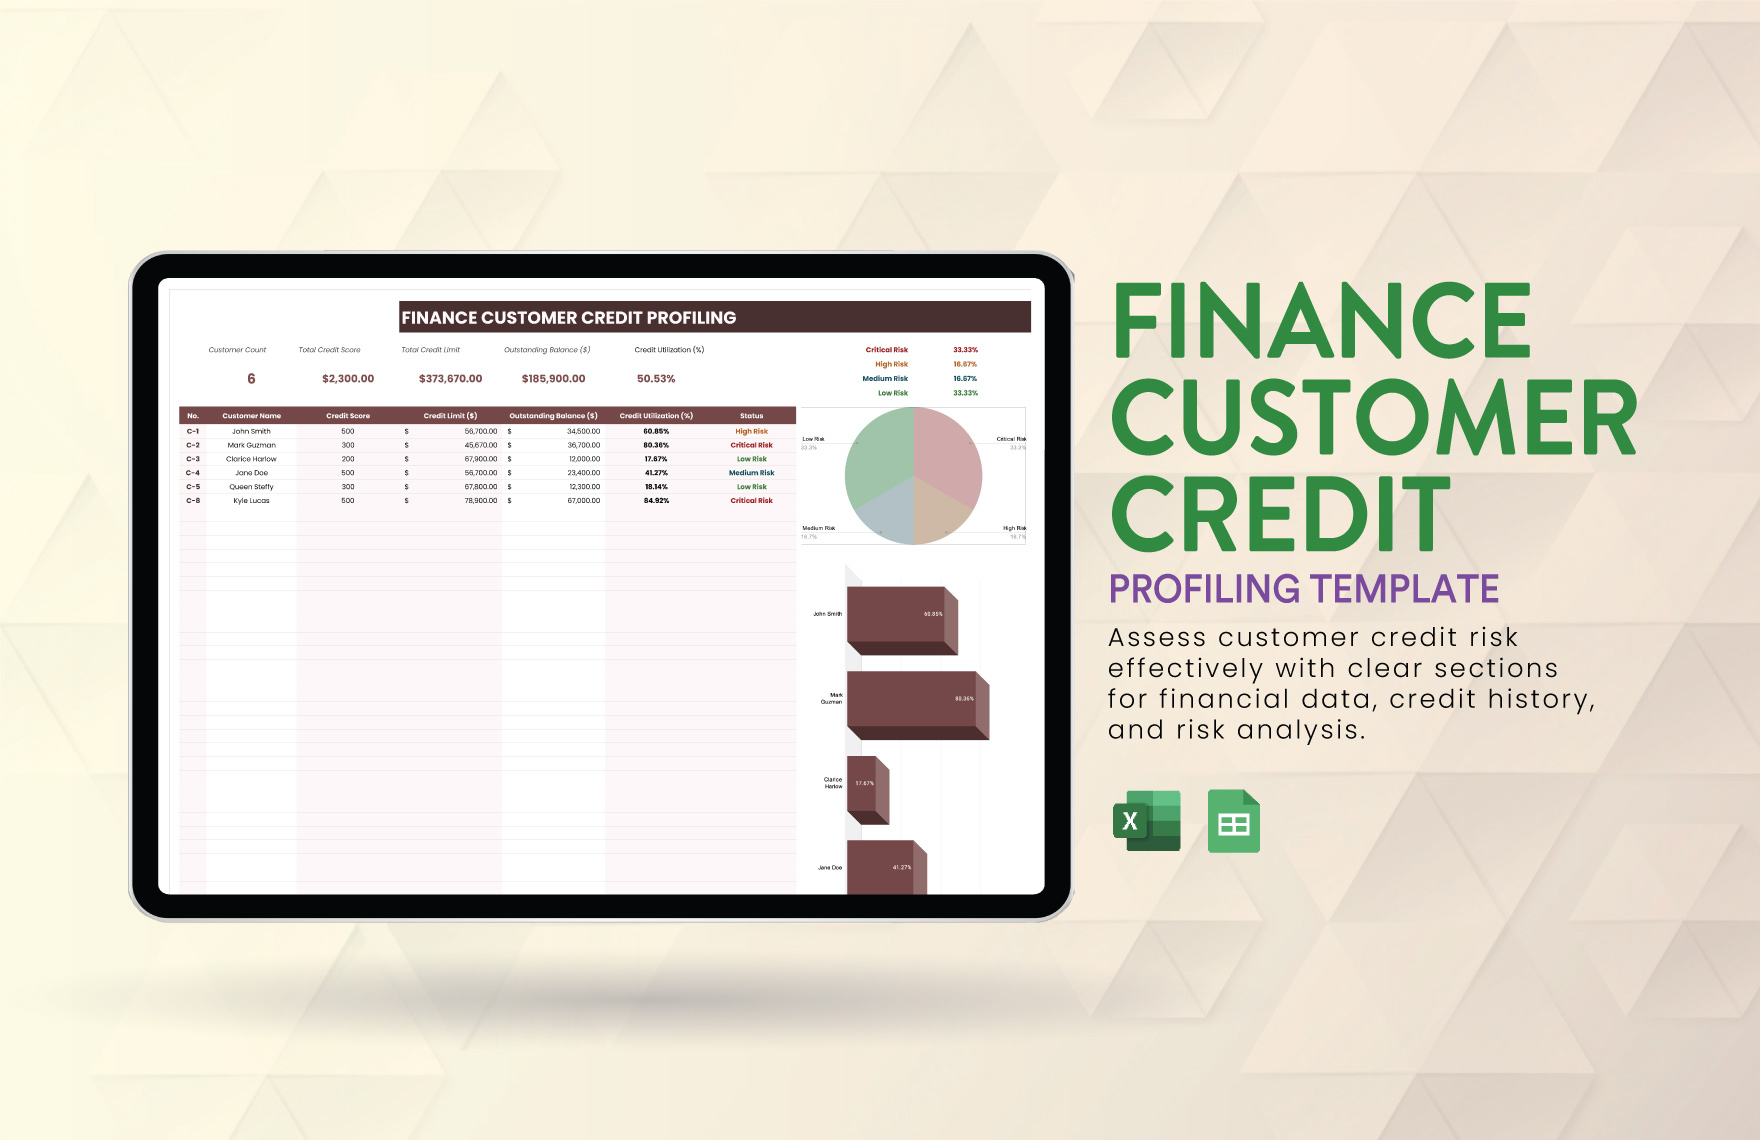 Finance Customer Credit Profiling Template